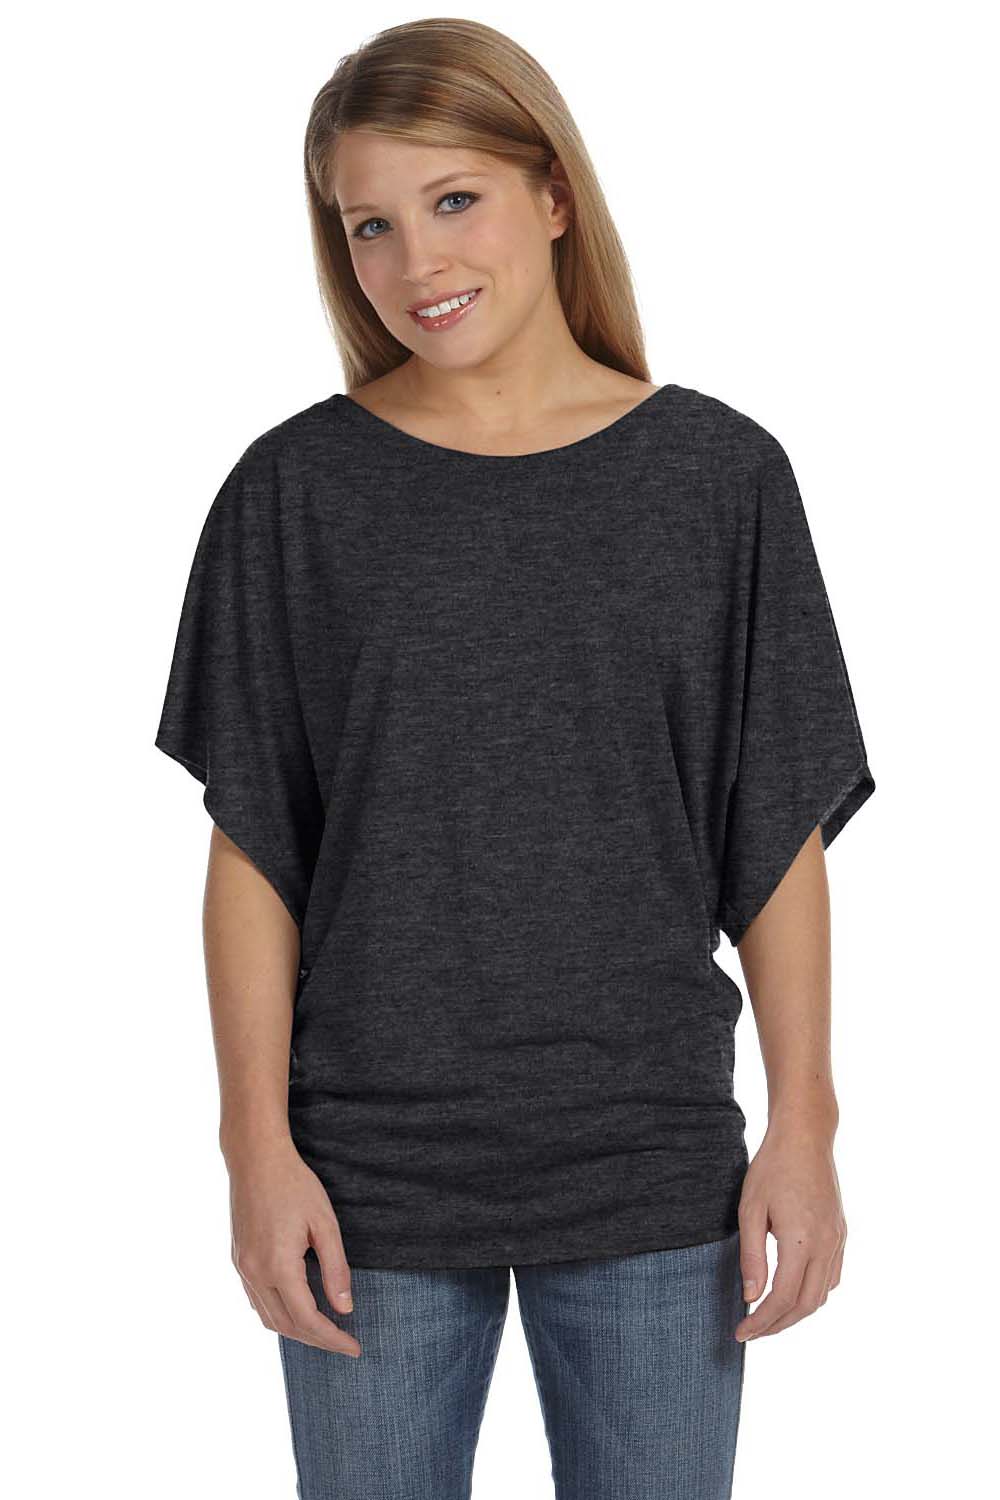 Bella + Canvas 8821 Womens Flowy Draped Dolman Short Sleeve Wide Neck T-Shirt Heather Dark Grey Front